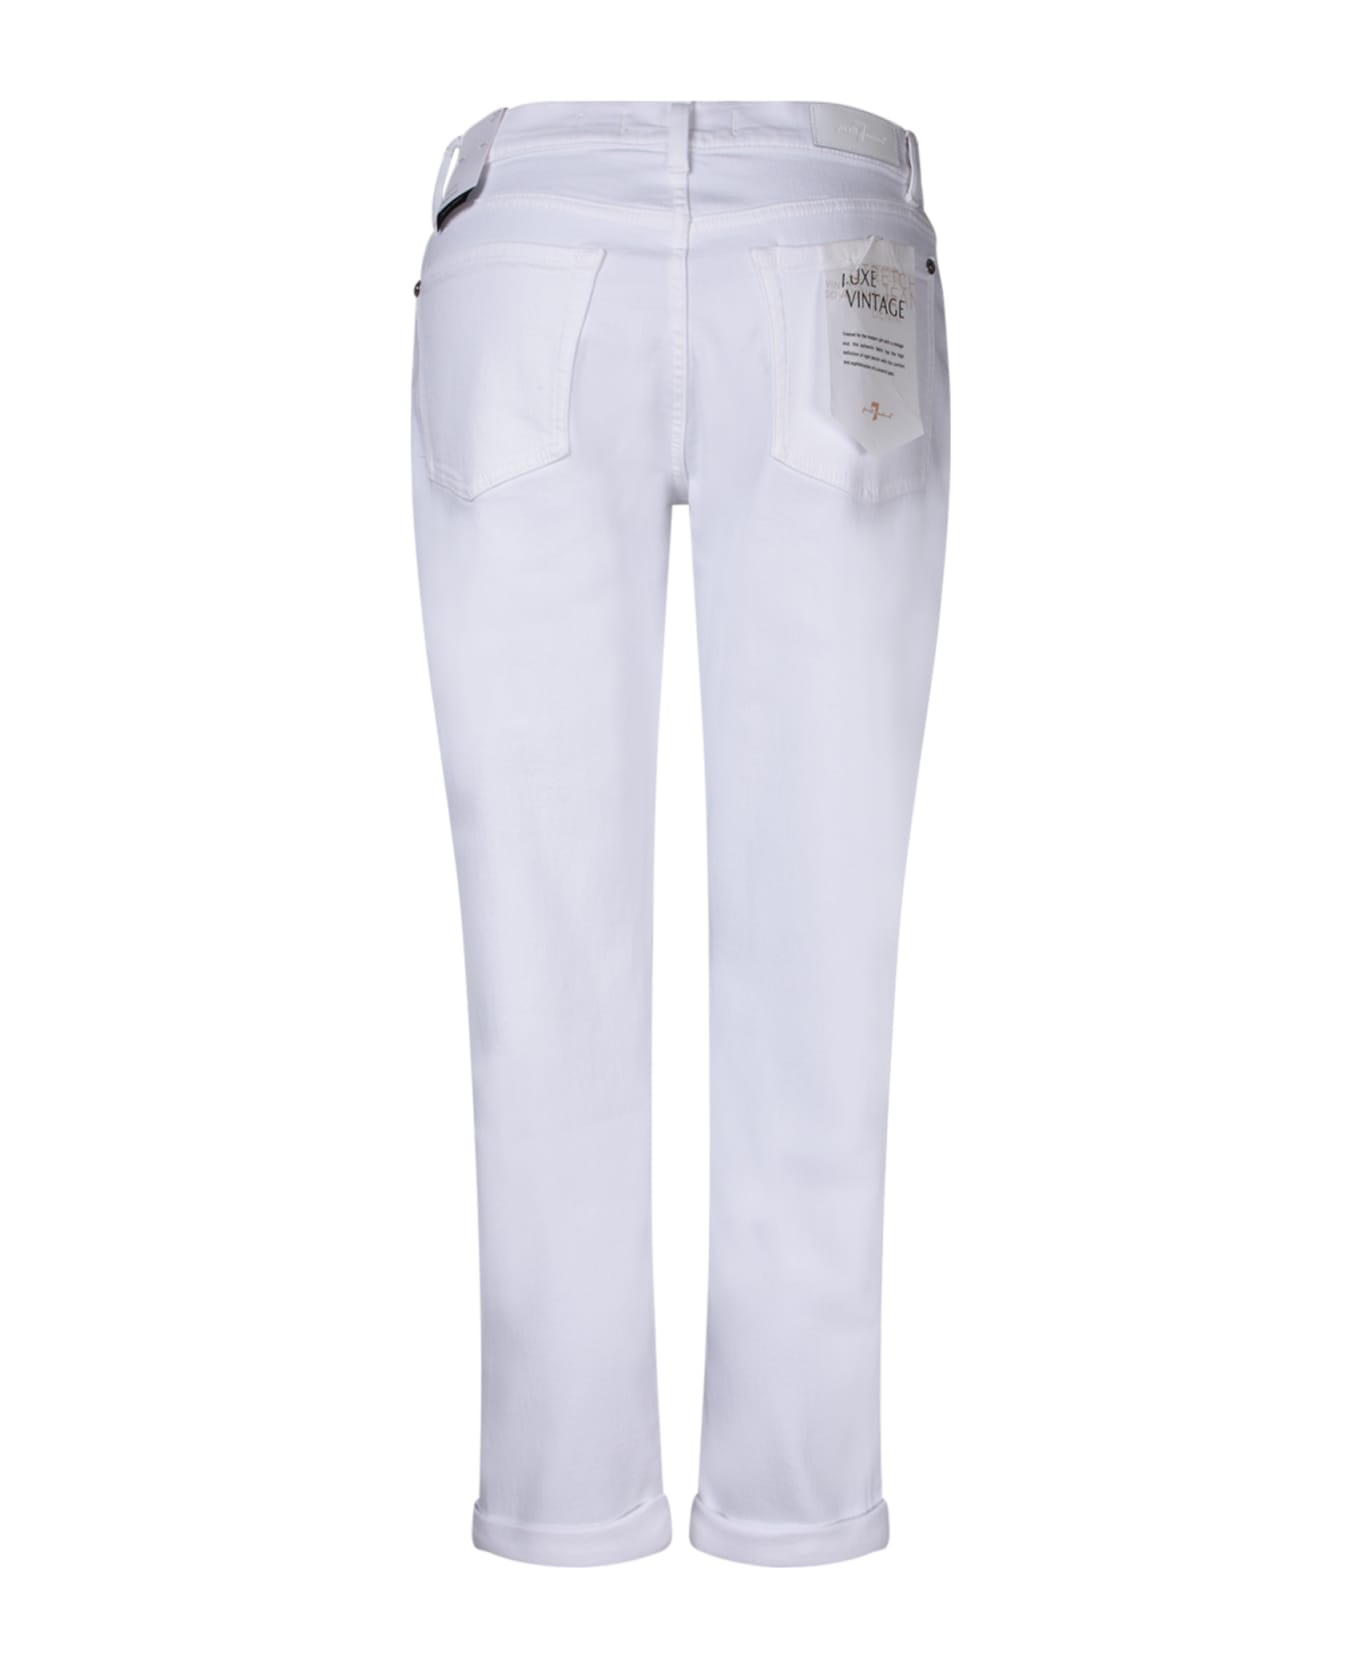 7 For All Mankind Josefina White Jeans - White